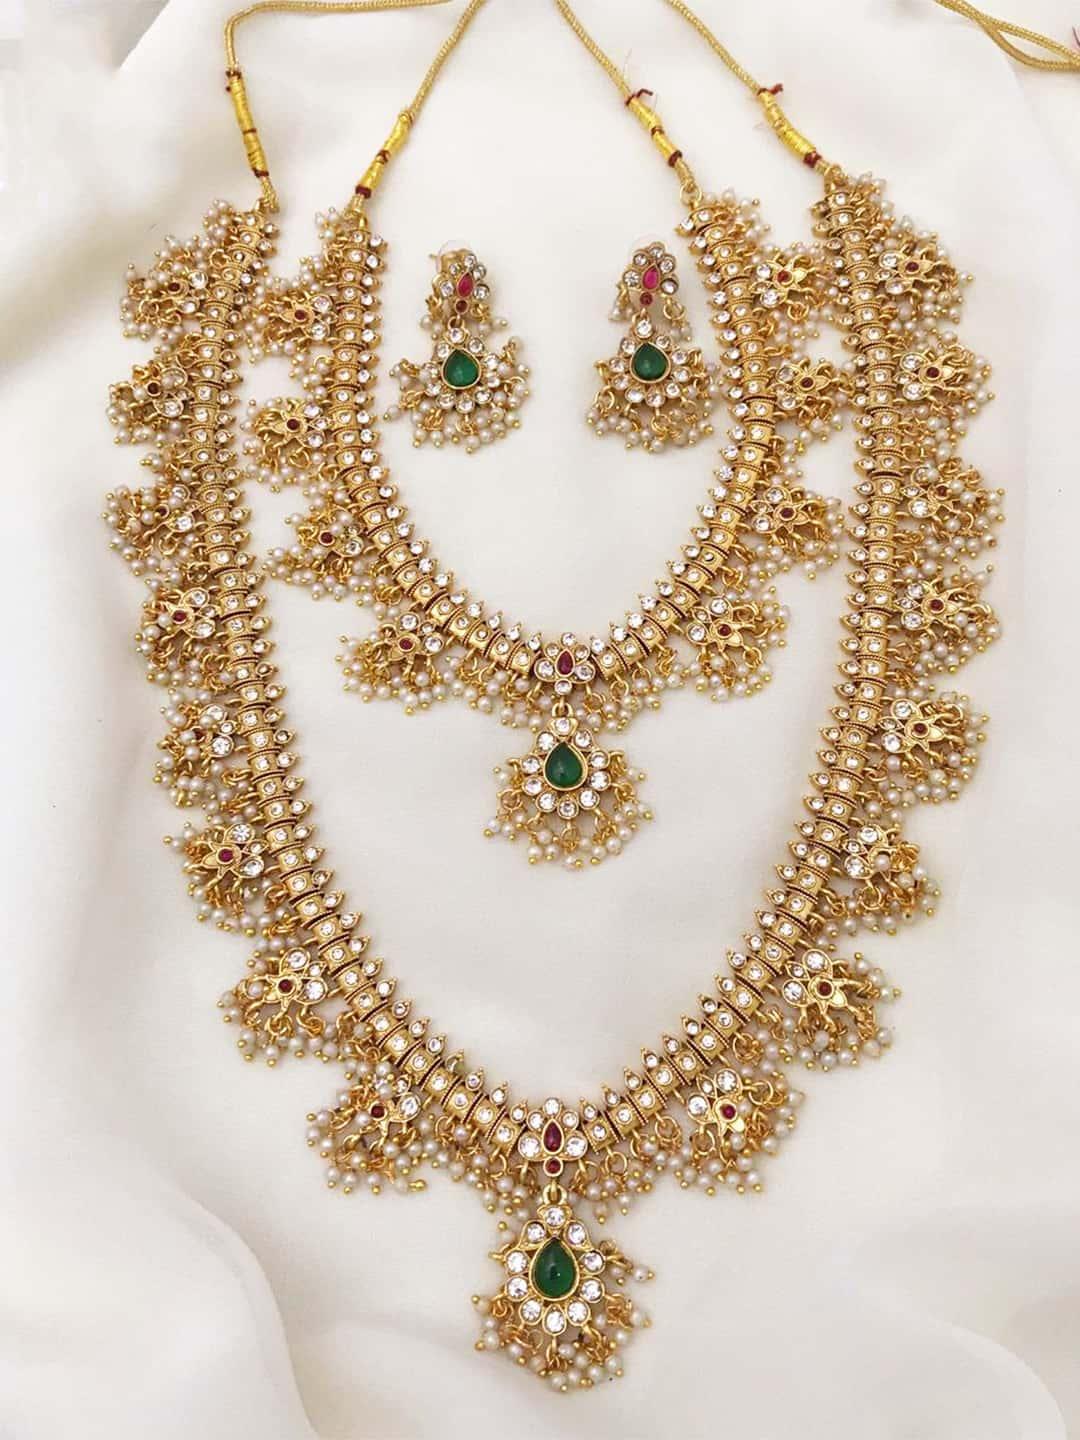 Ishhaara Double Layer Guttapusalu Haram Necklace With Earrings